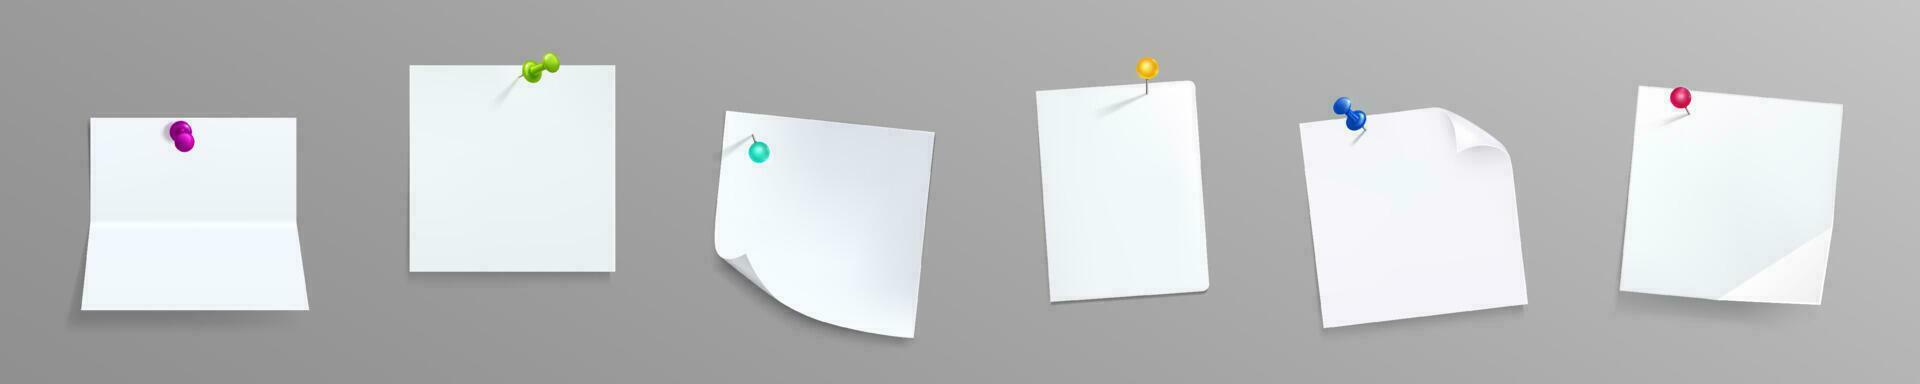 notas de papel com alfinetes, adesivos brancos ou bloco de notas vetor